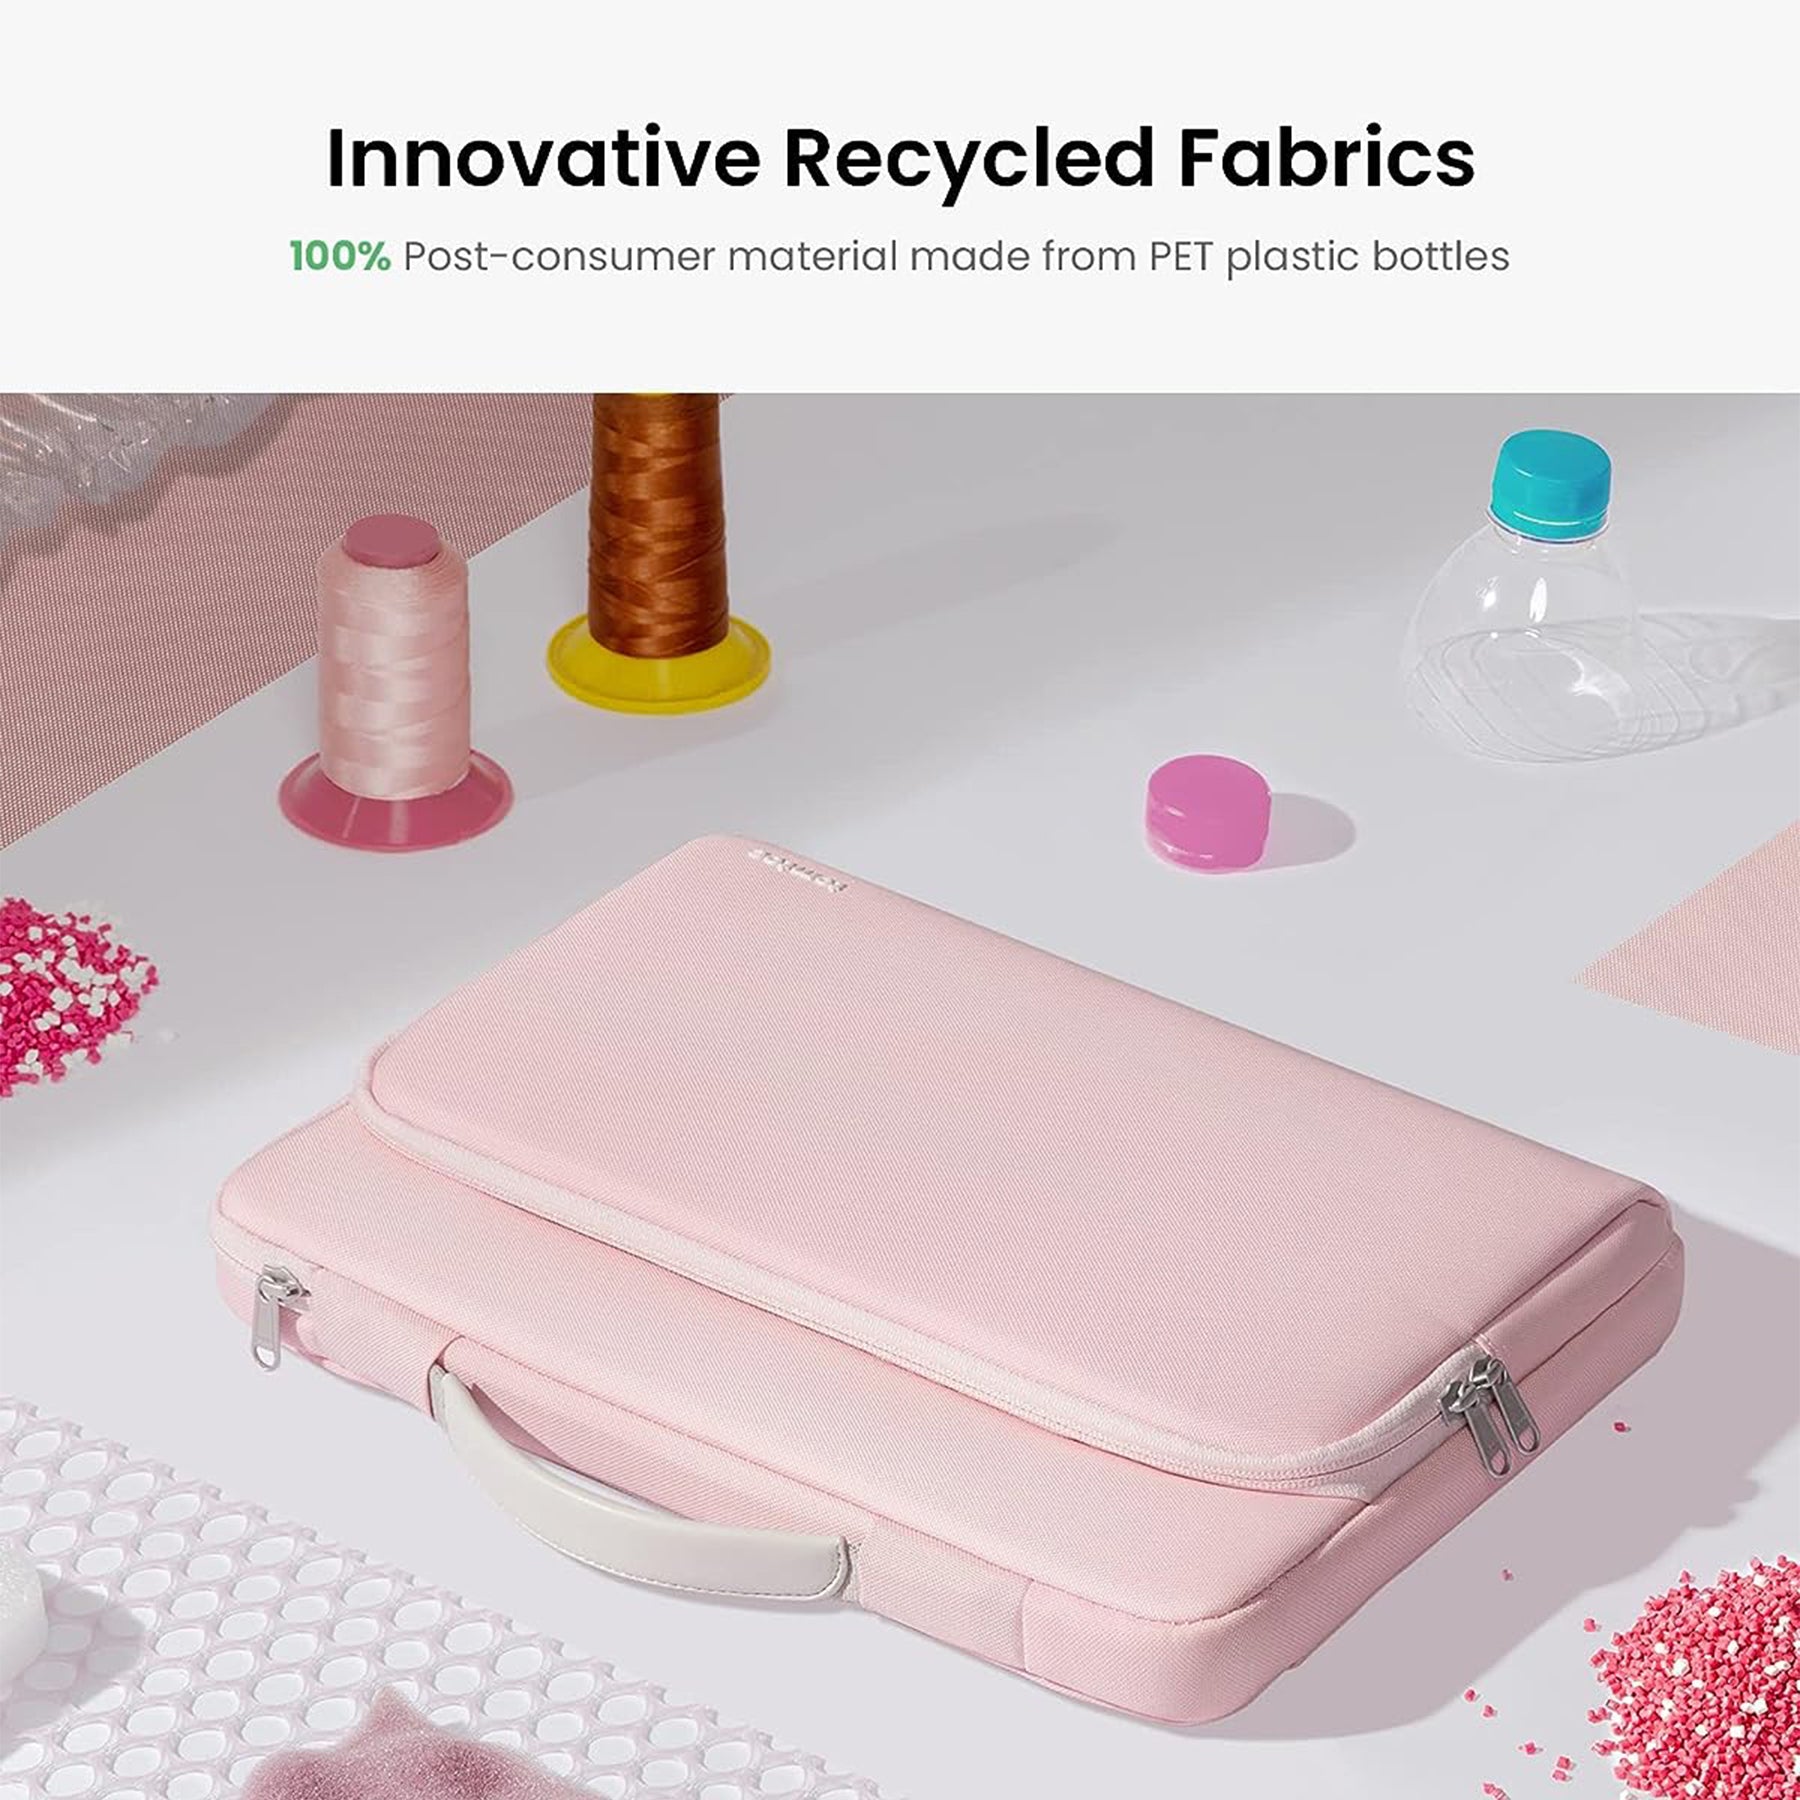 tomtoc 13 Inch Versatile 360 Protective Laptop Briefcase - Pink